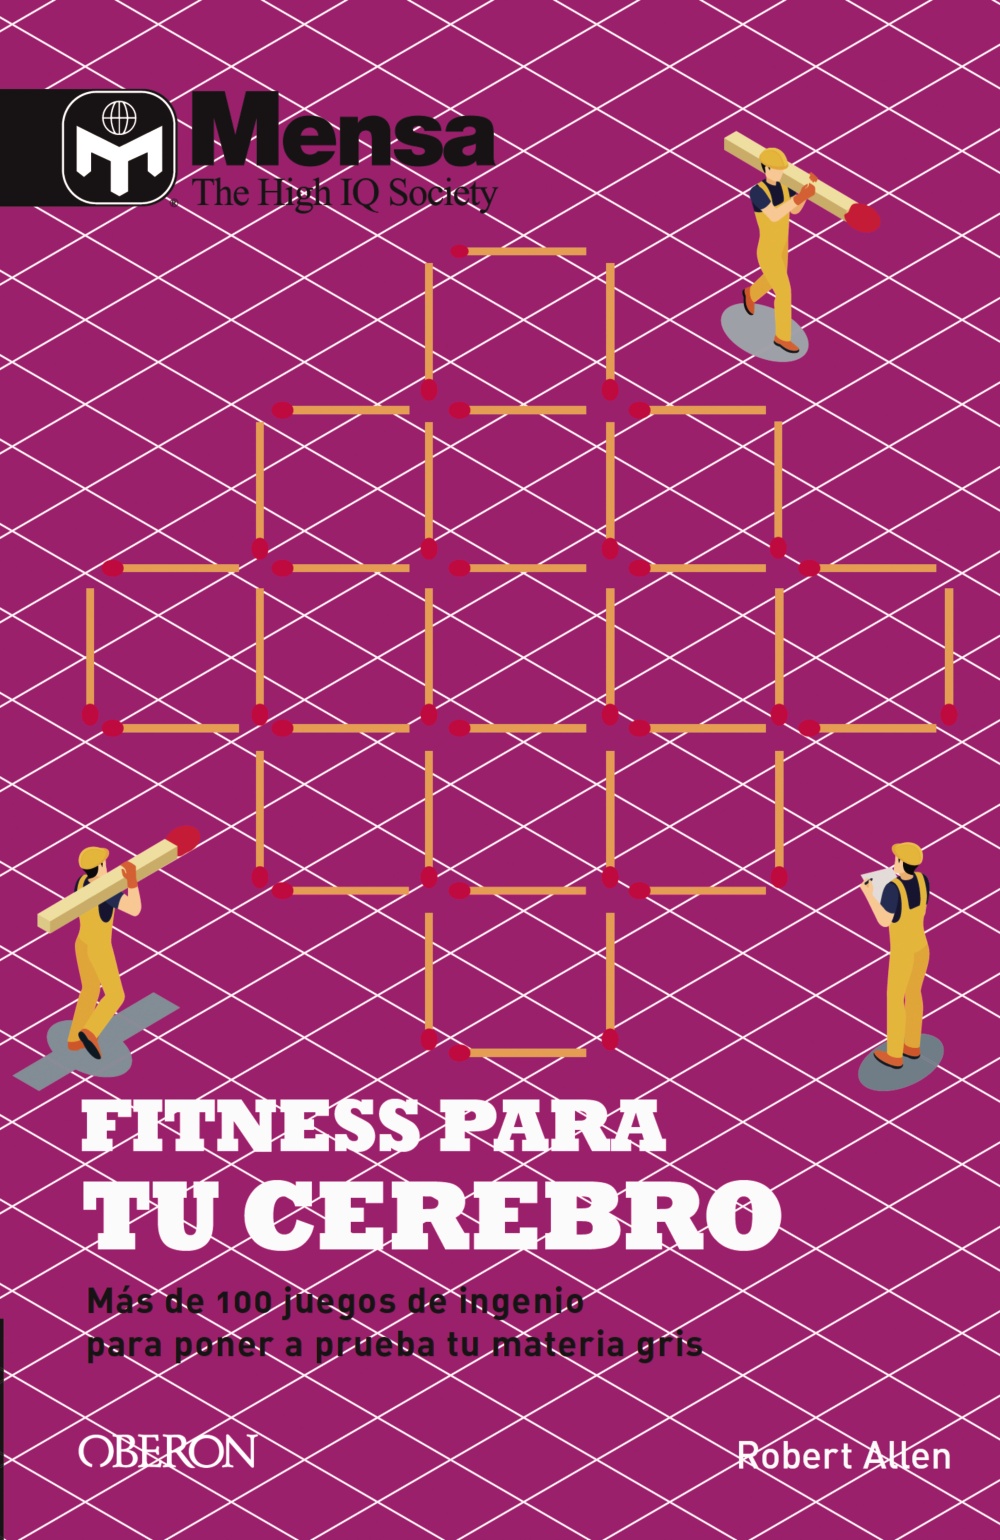 fitness-para-tu-cerebro-978-84-415-4293-8.jpg